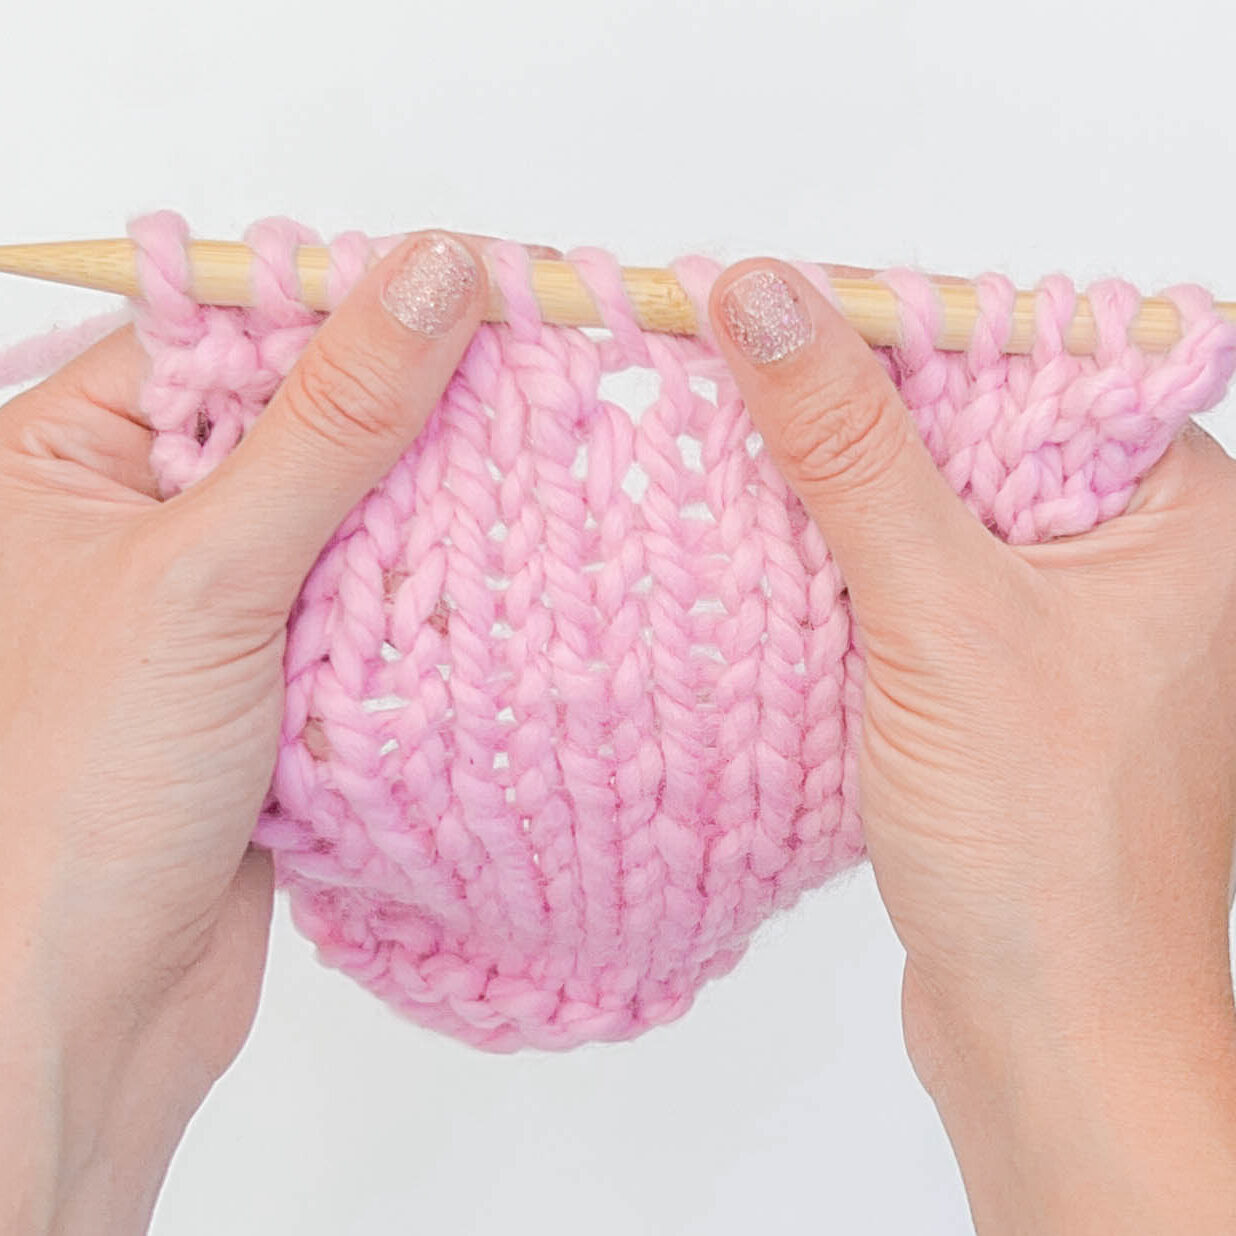 Yarn Over on a knit row - Step 4